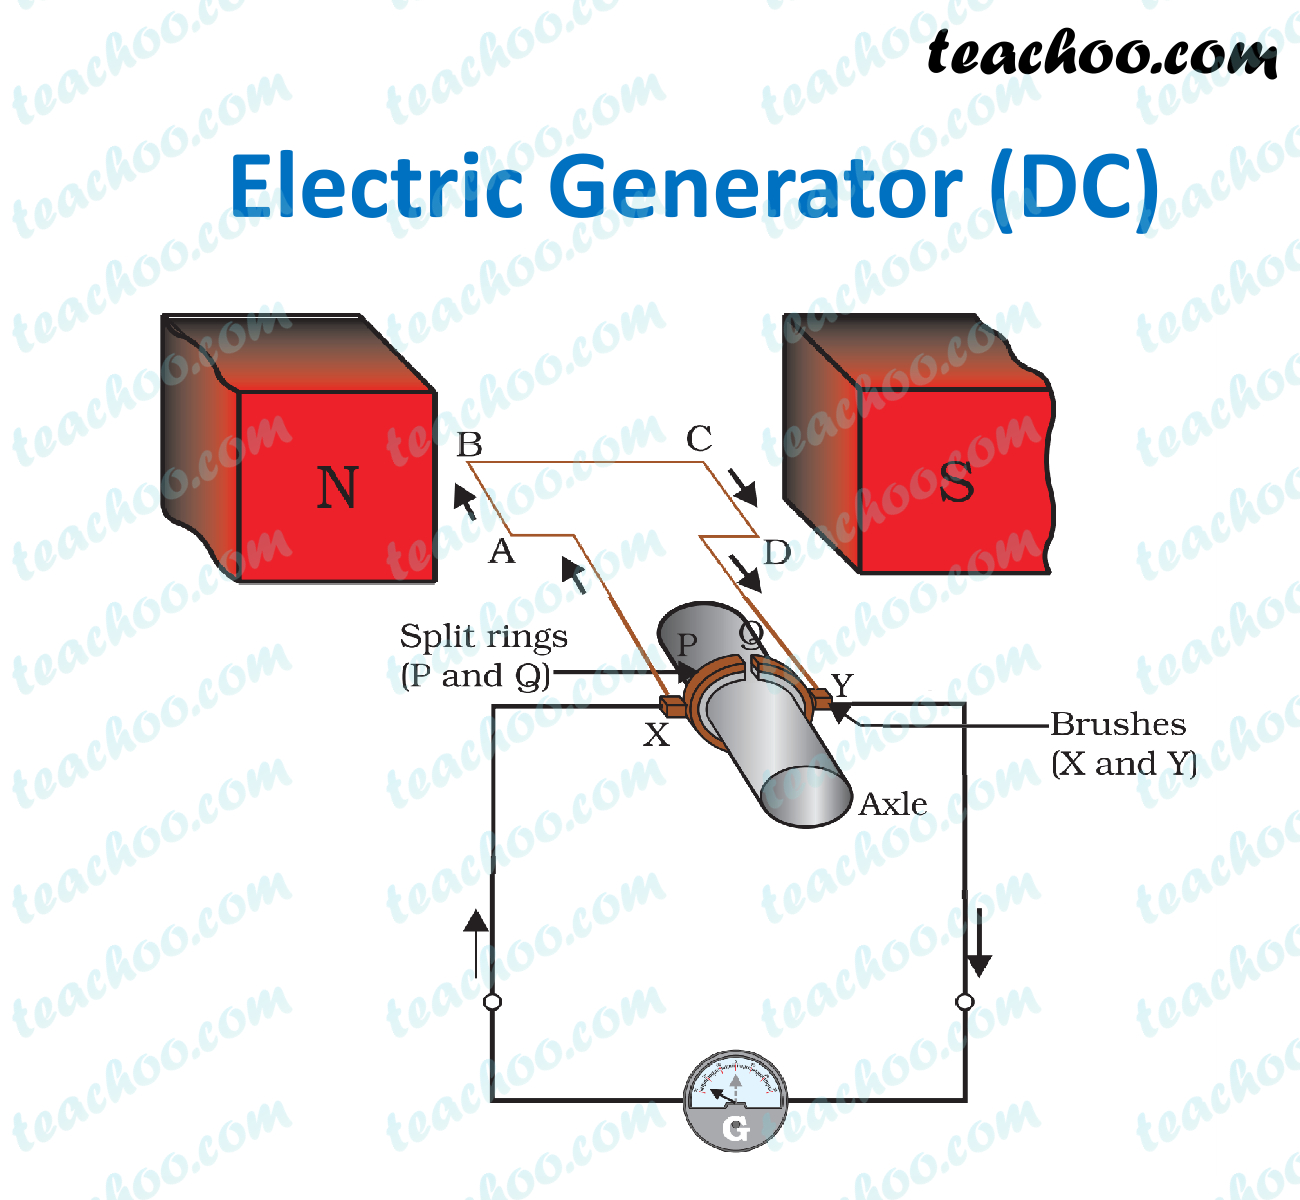 dc-electric-generator---teachoo.jpg